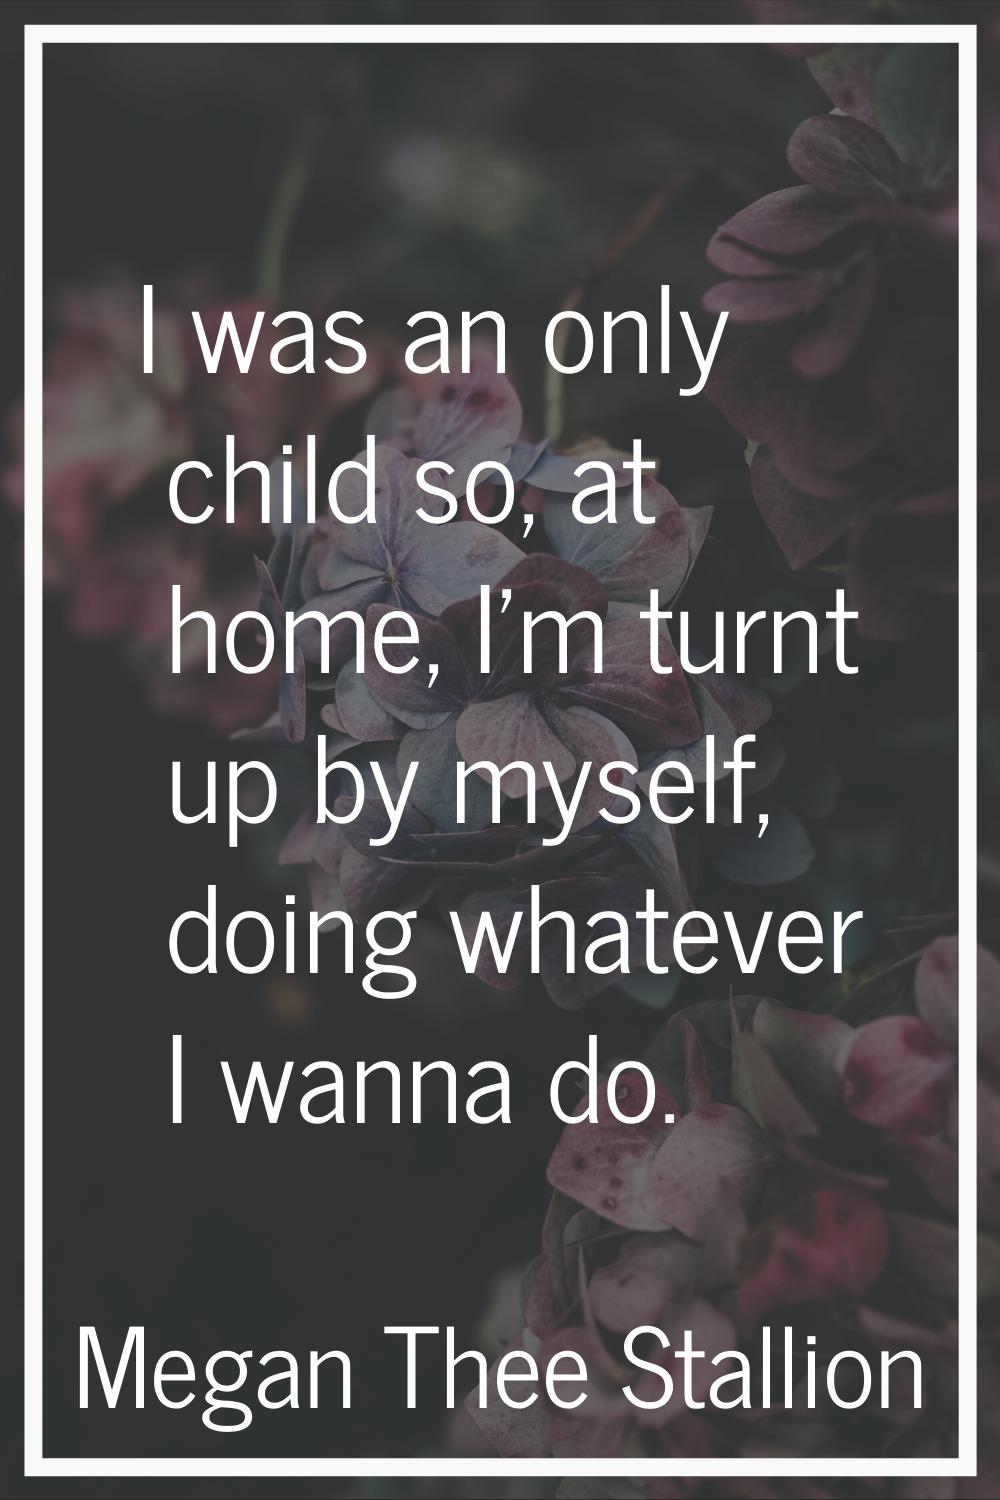 I was an only child so, at home, I'm turnt up by myself, doing whatever I wanna do.